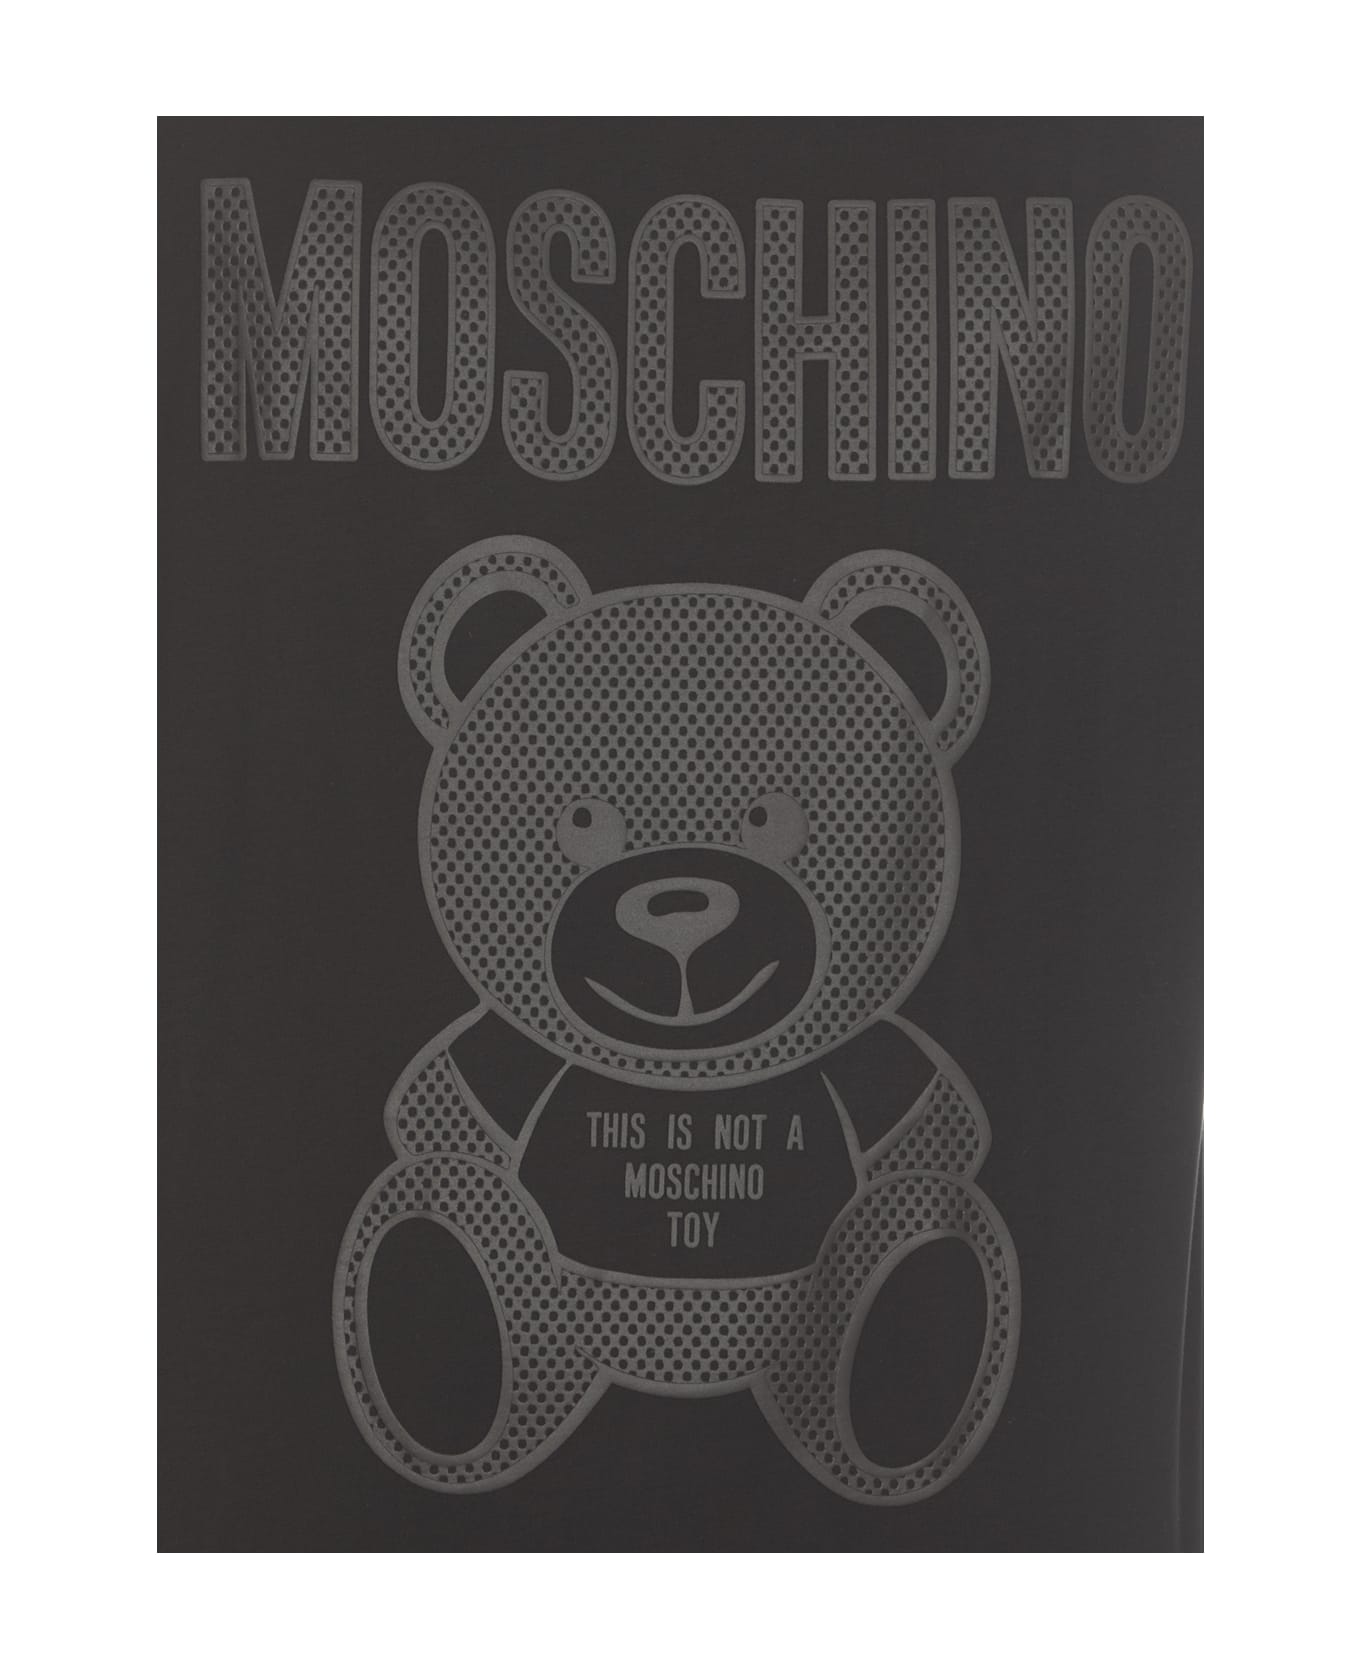 Moschino T-shirt With Logo - Black